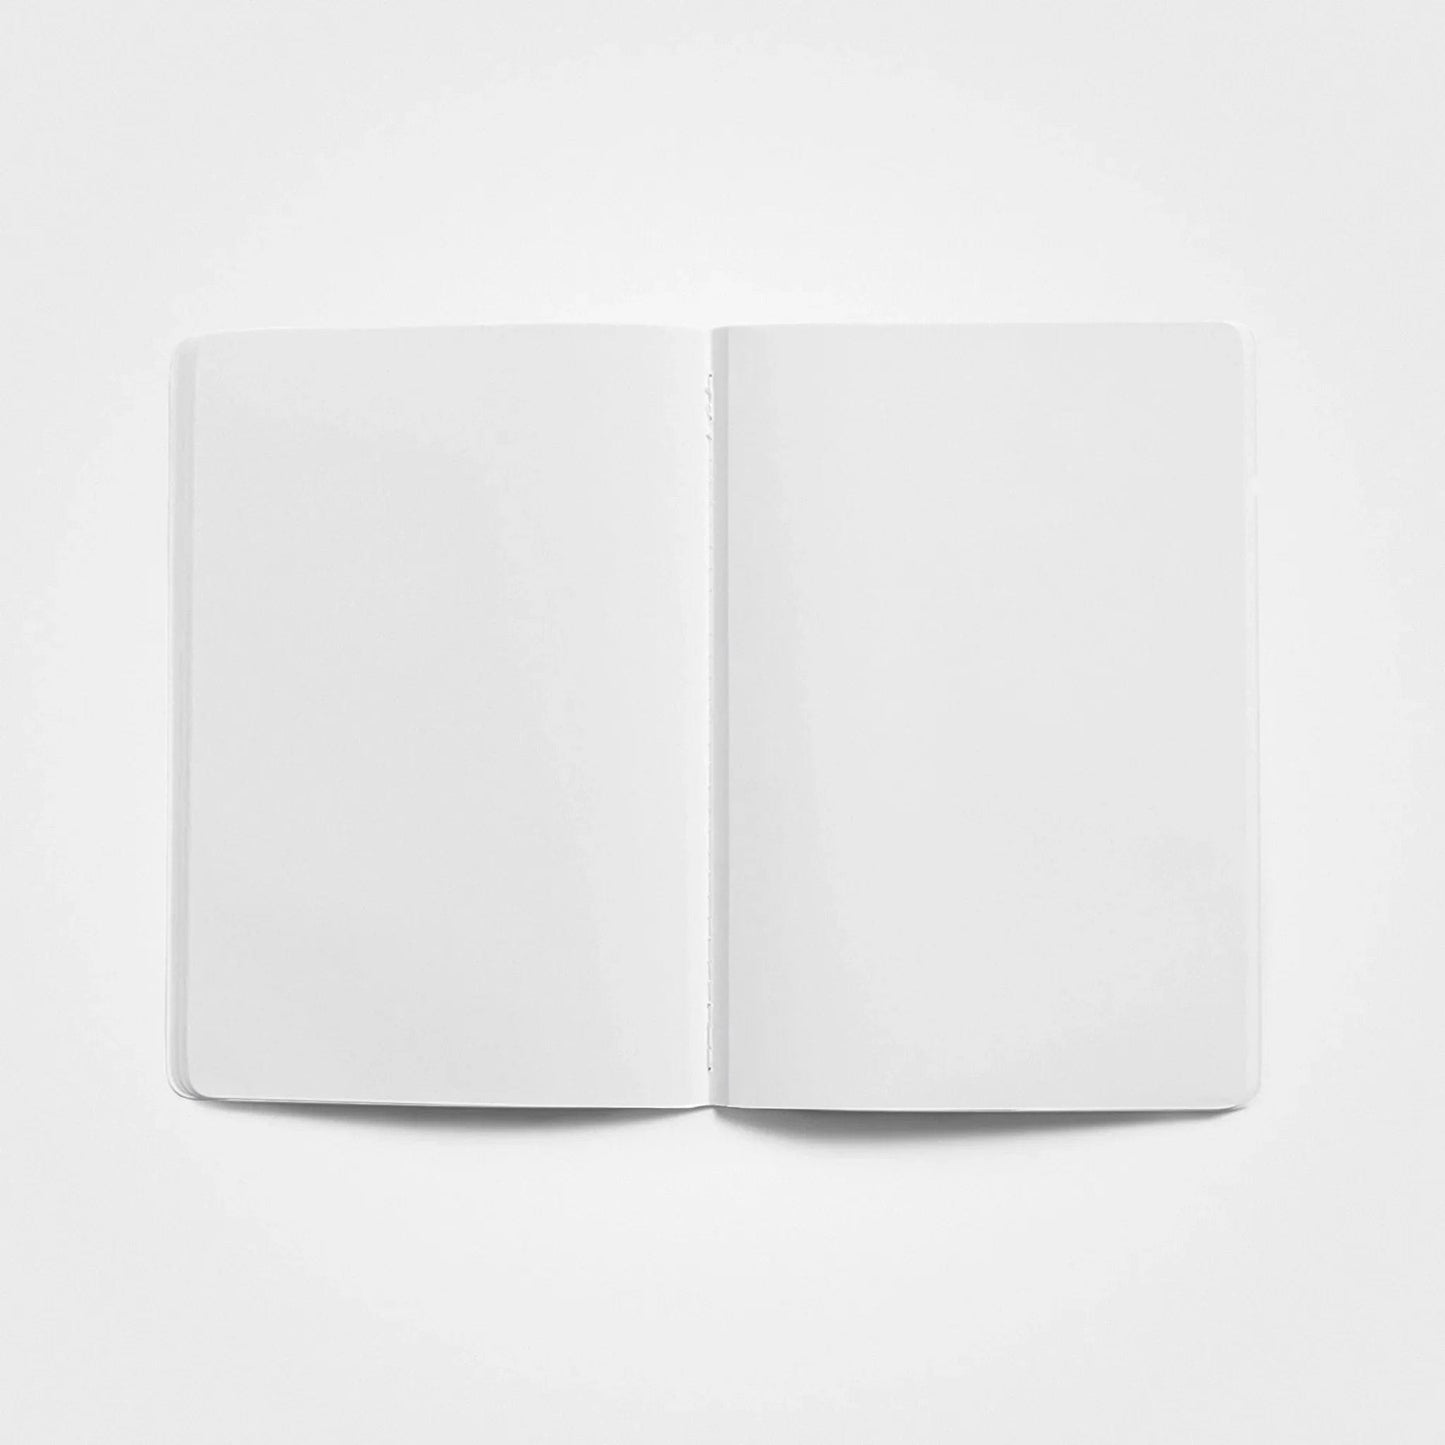 Steinpapier-Notizbuch – A5 Softcover, Charcoal Black